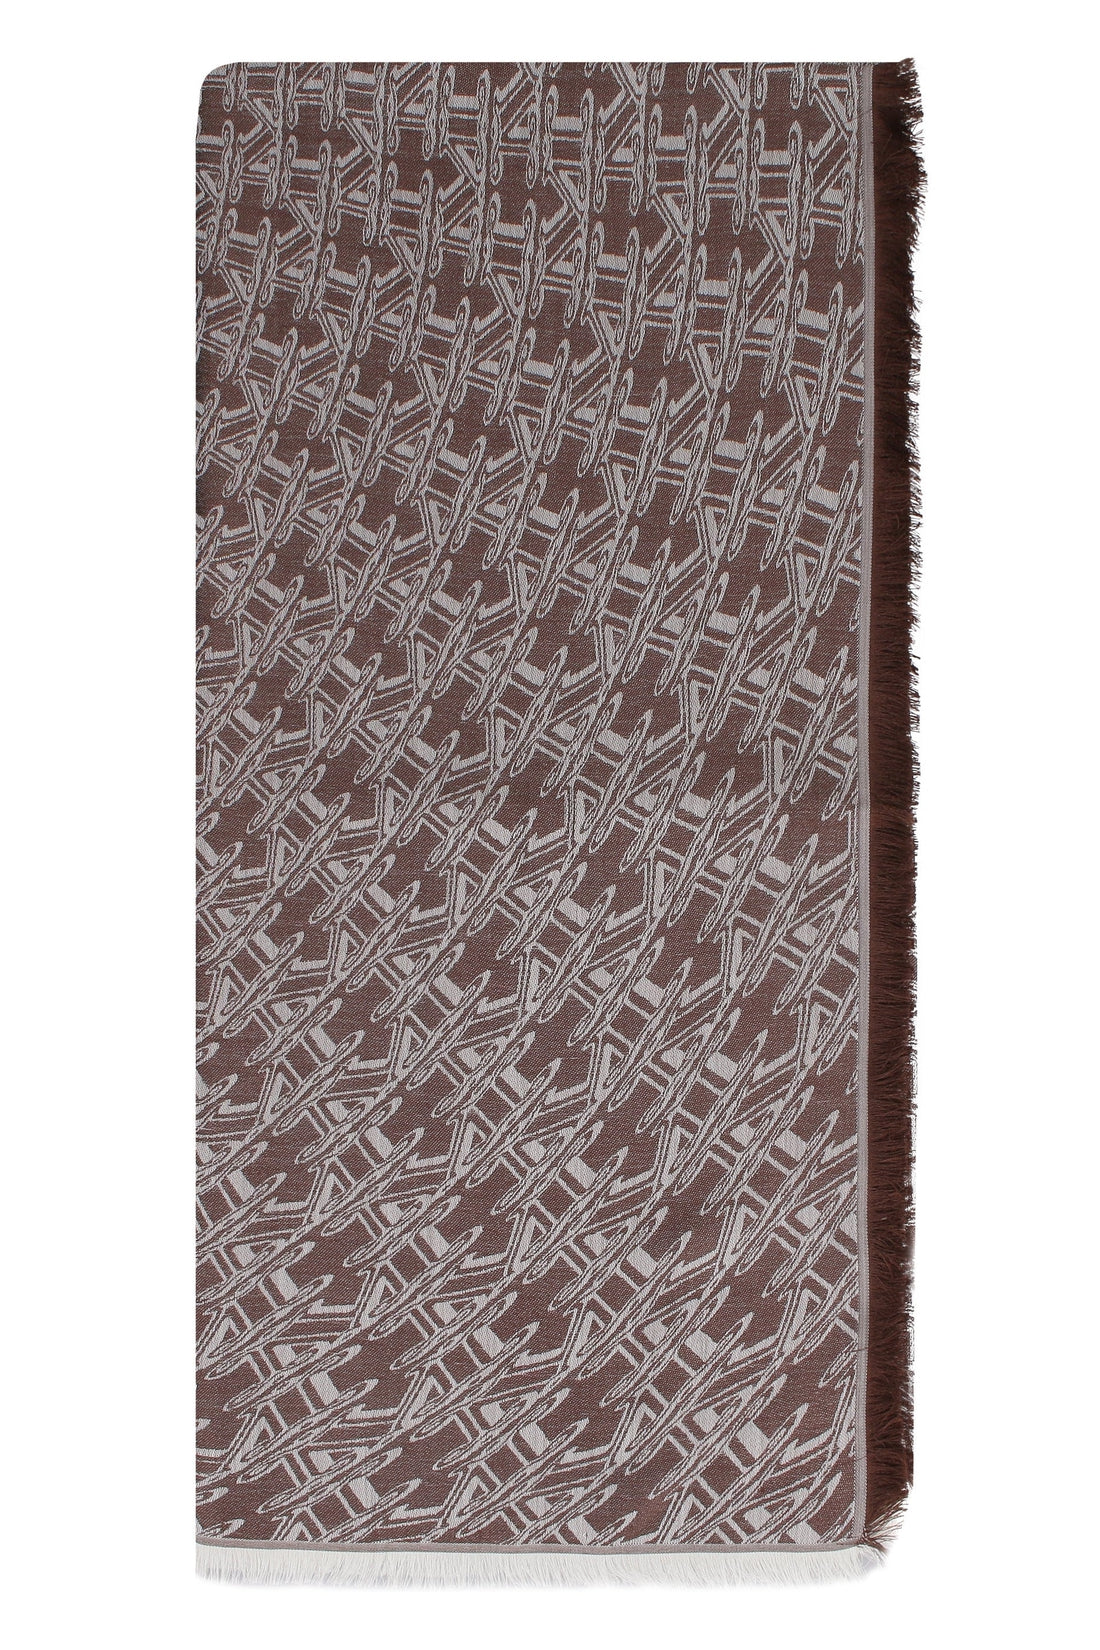 Max Mara-OUTLET-SALE-Silk and wool jacquard shawl-ARCHIVIST